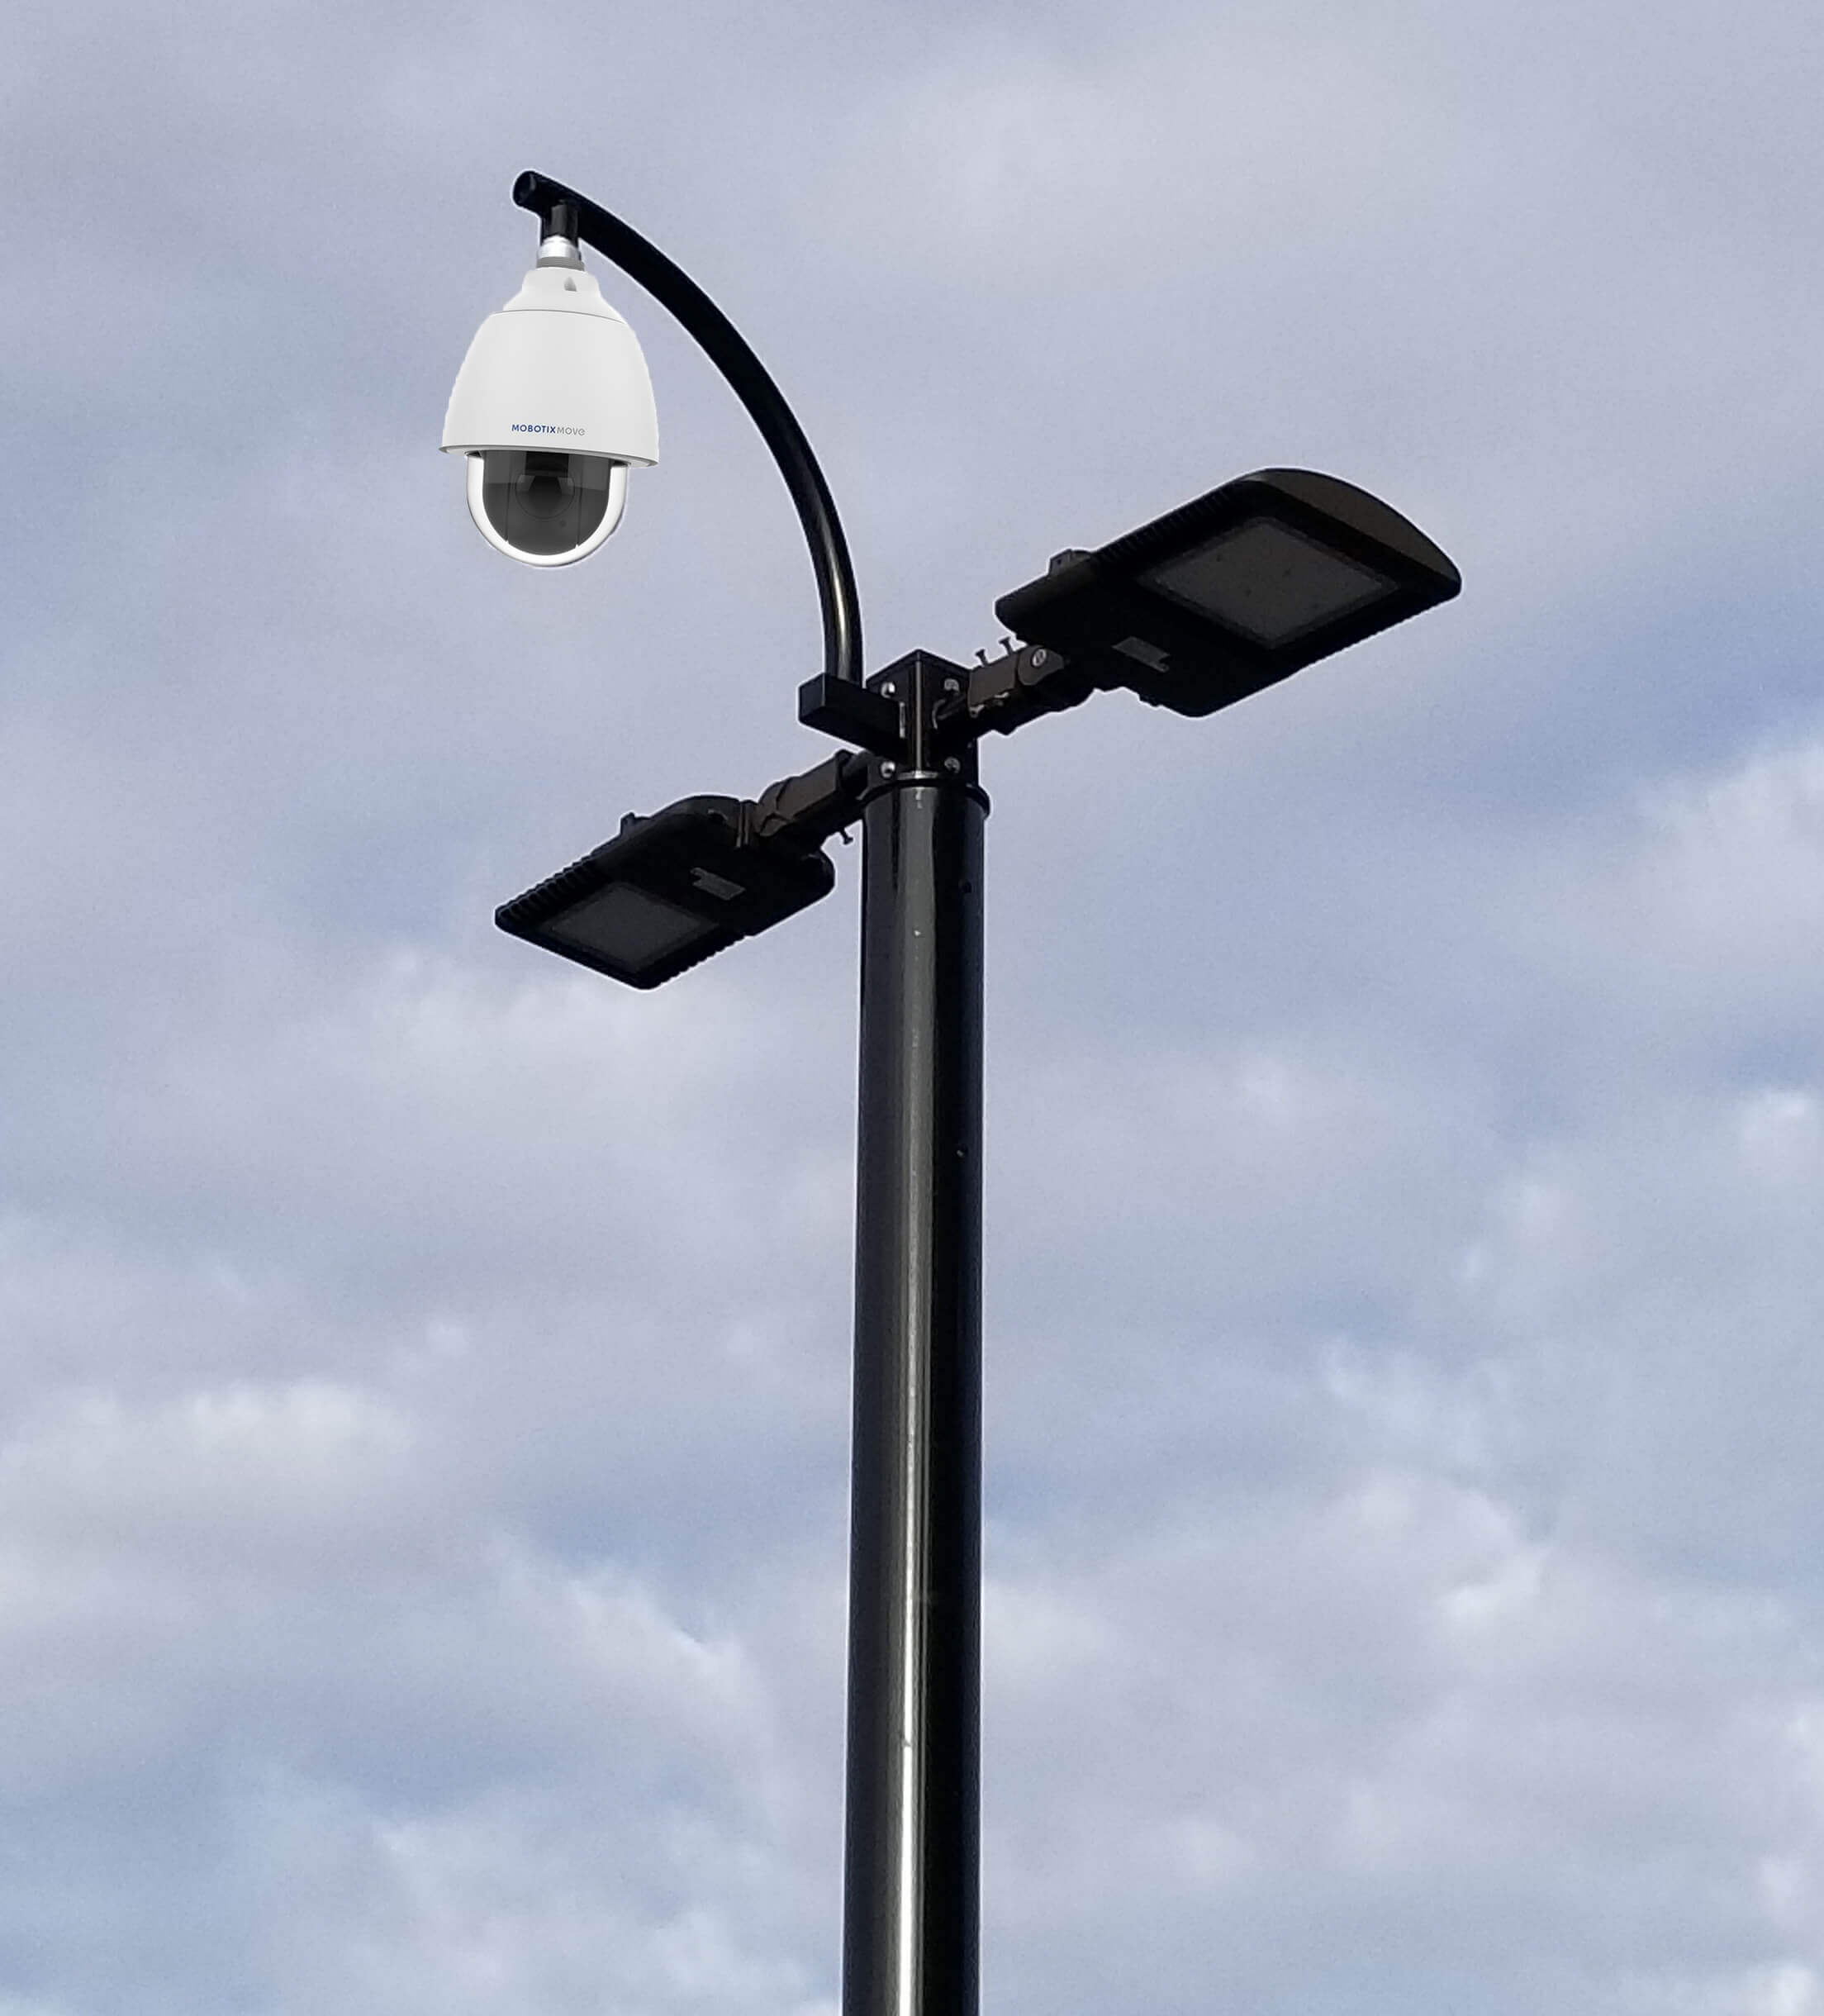 Mobitx Security Camera Pole